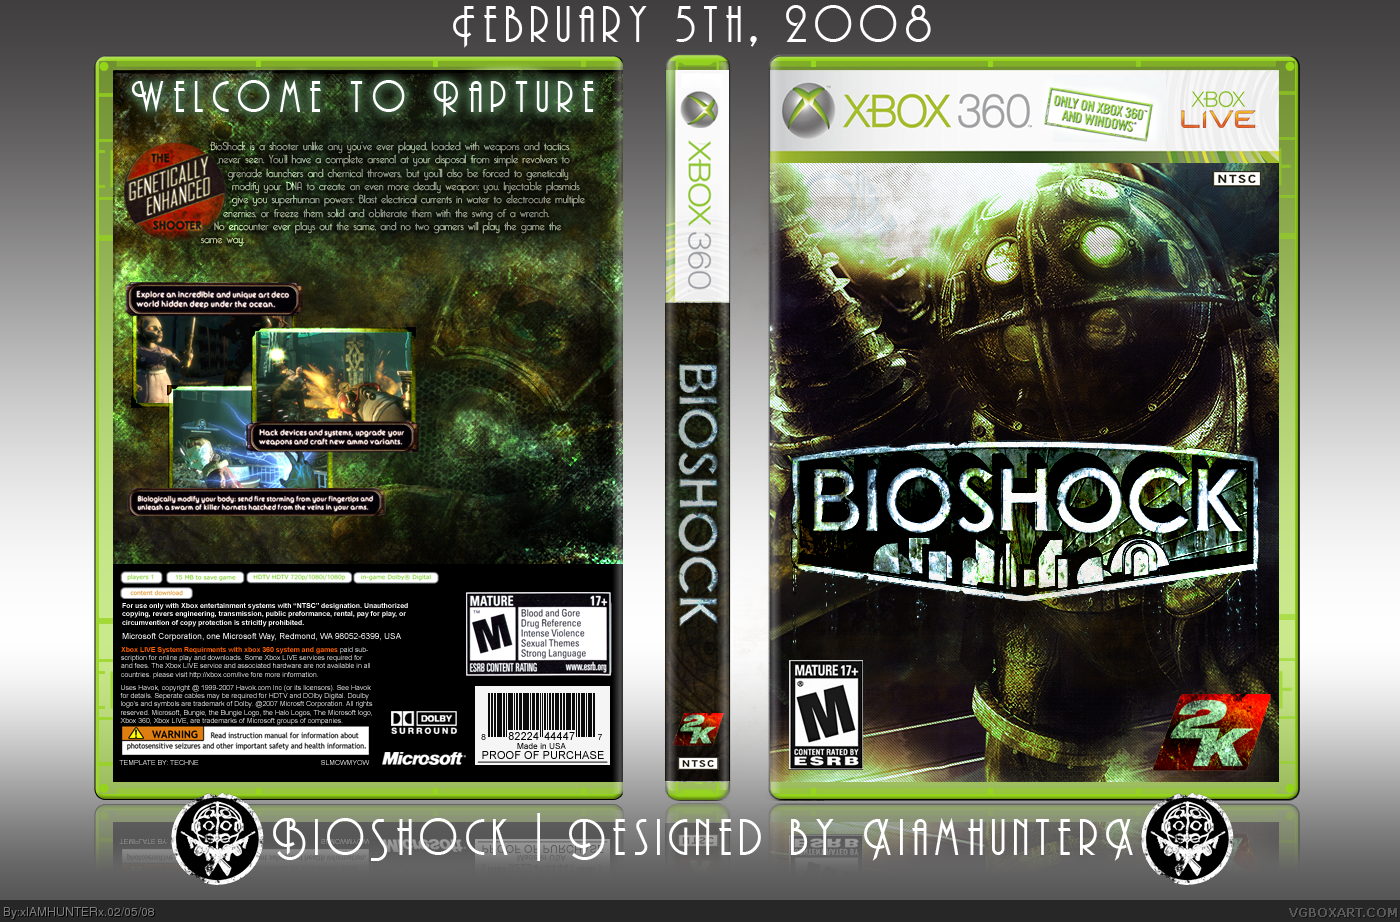 Старые игры на xbox. Bioshock Xbox 360 обложка. Биошок 2 обложка иксбокс360. Bioshock 2 Xbox 360 обложка. Хвох 360 диск Bioshock 2.